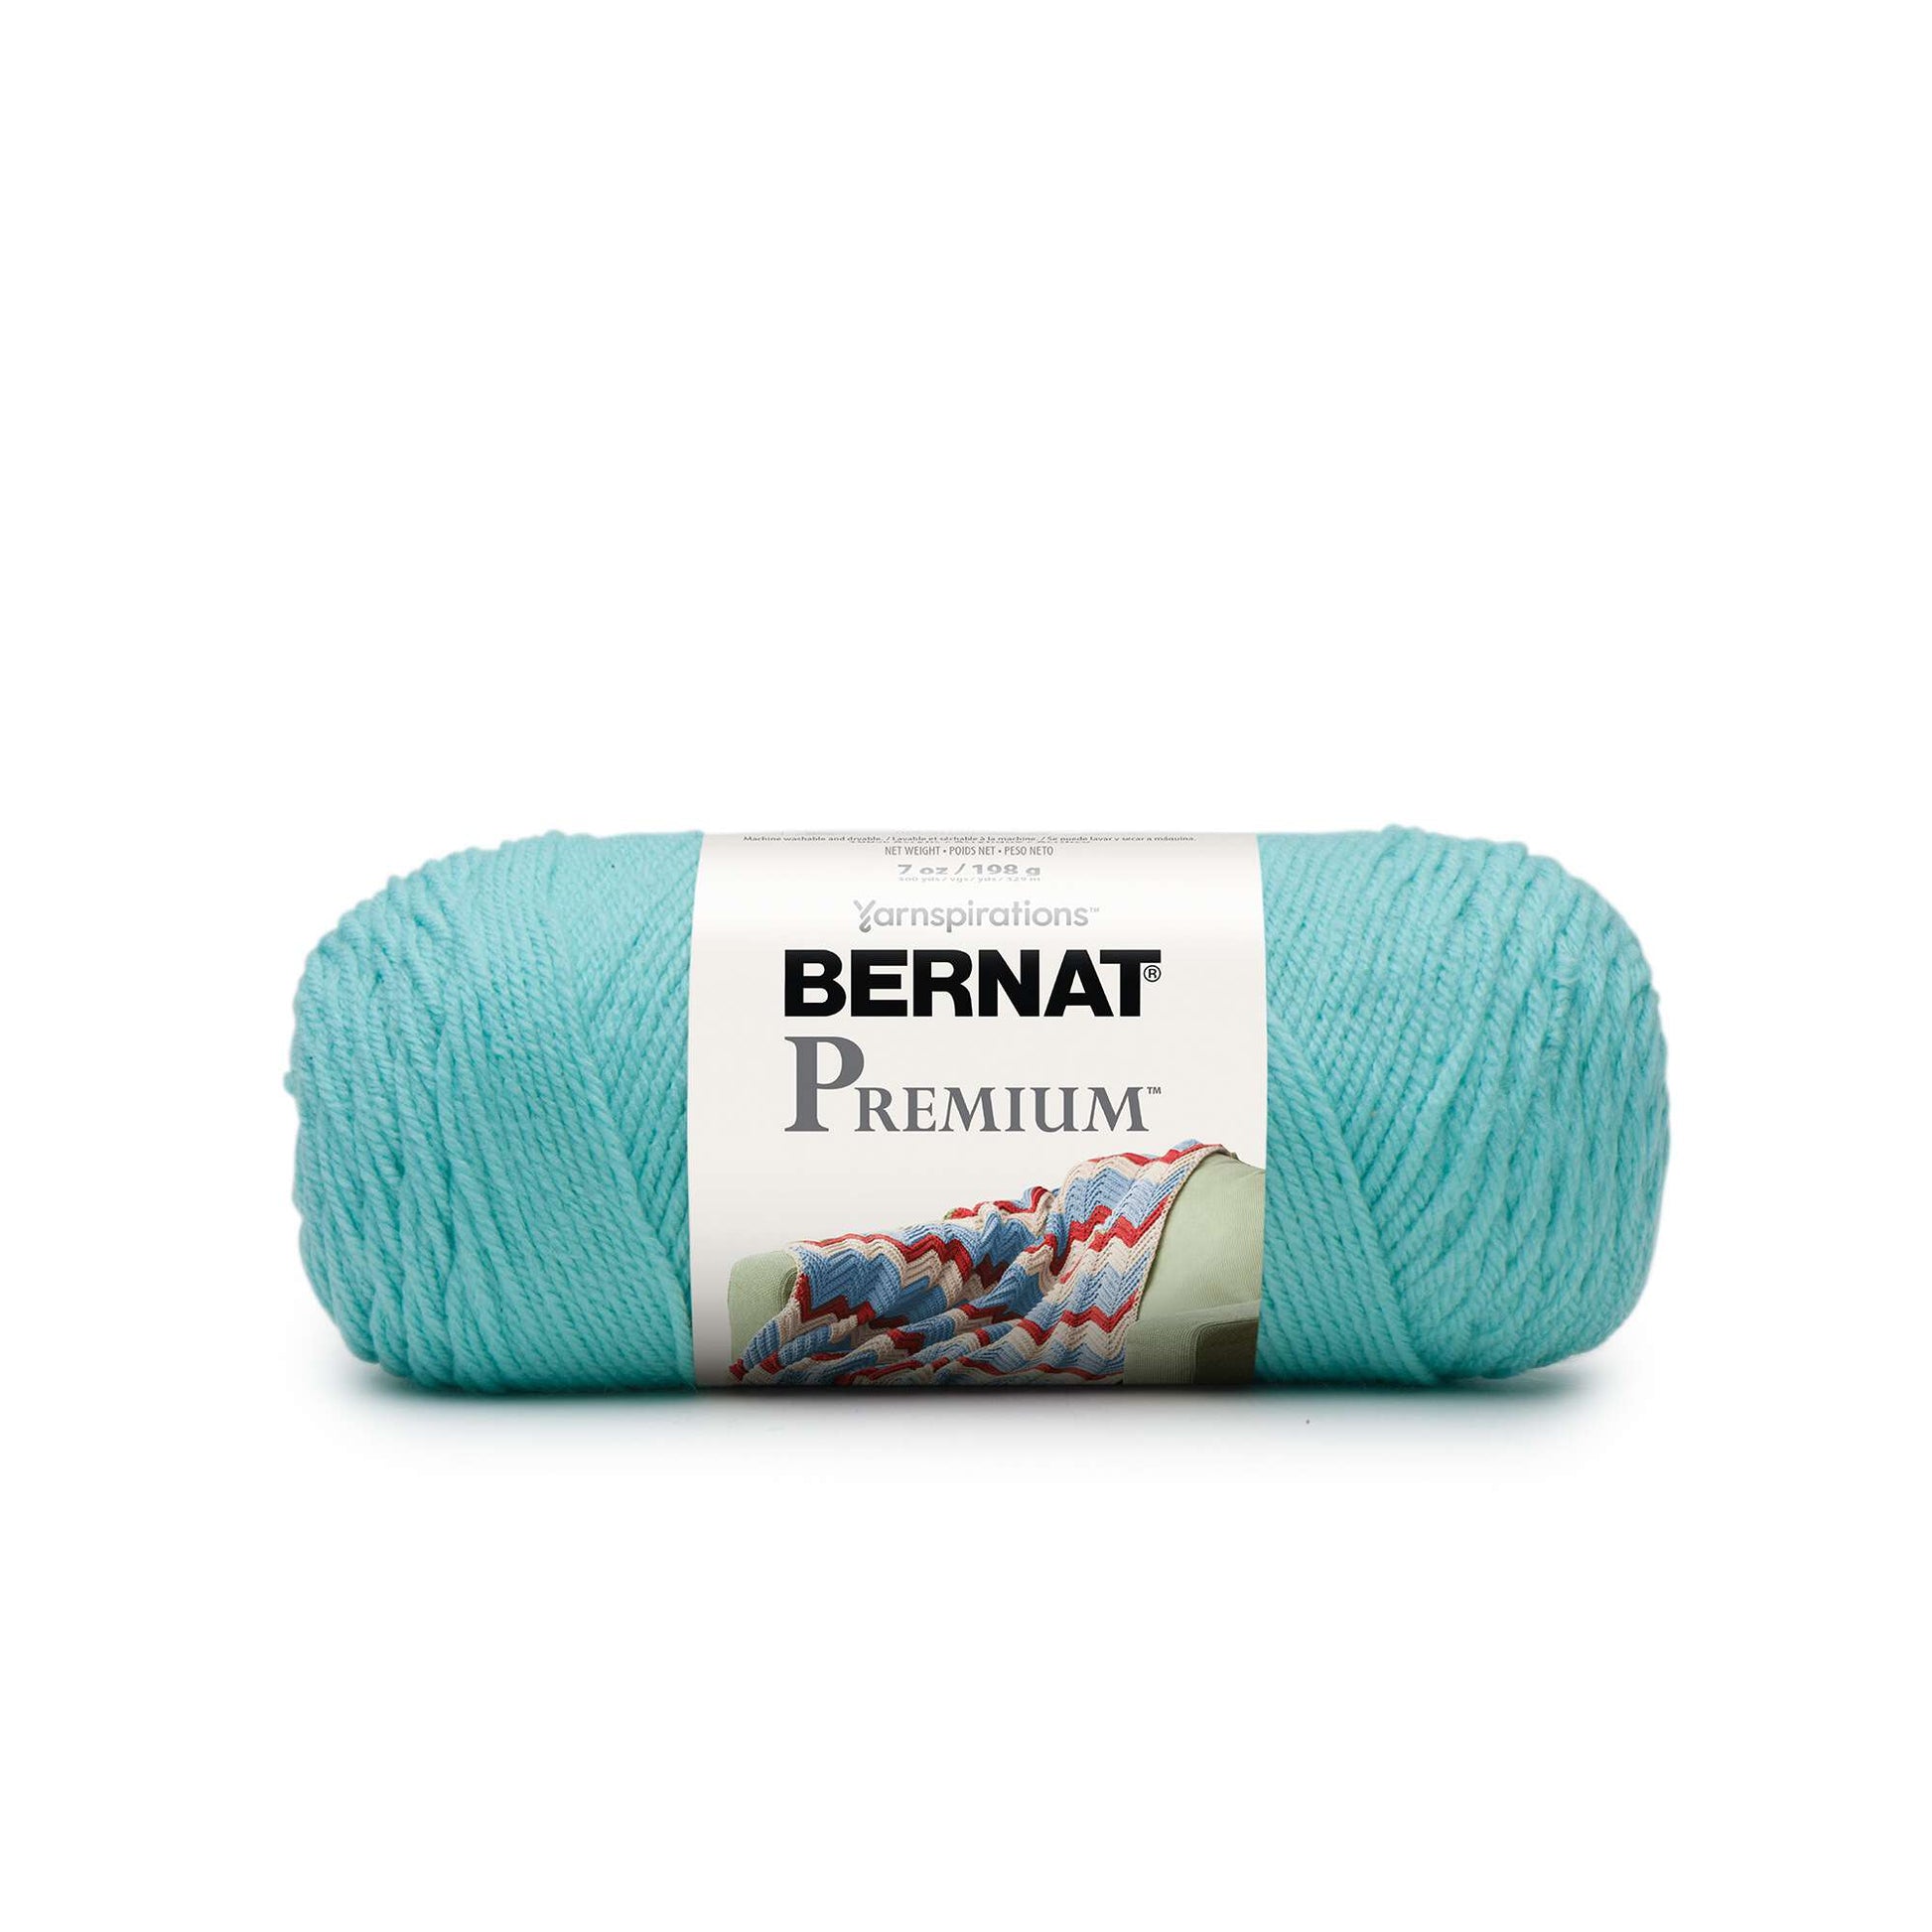 Bernat blanket yarn choice of color: gray, aqua, or navy